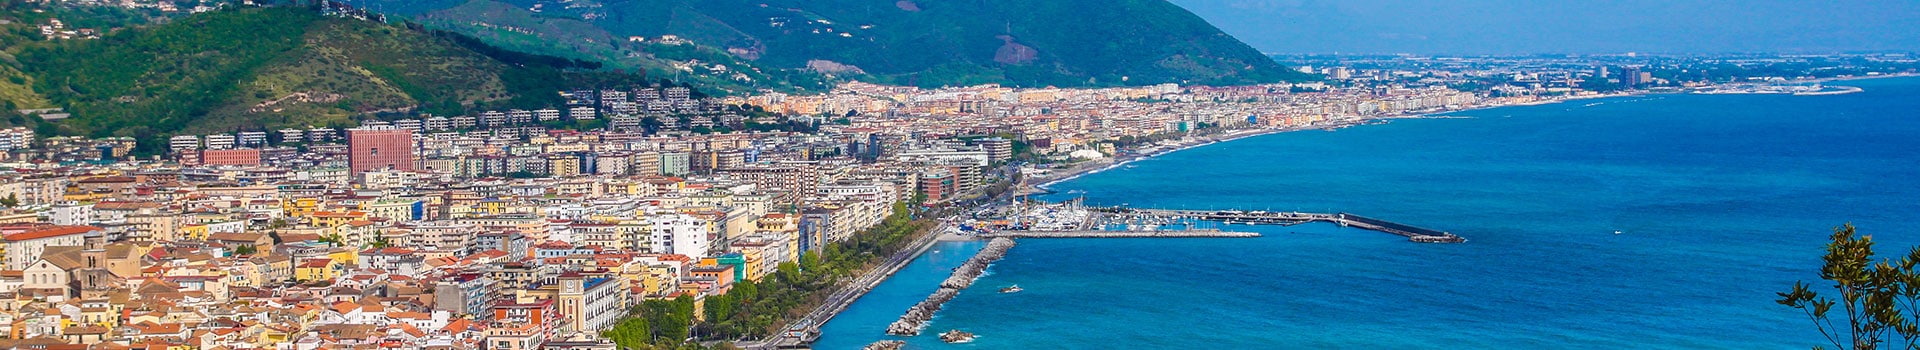 Billetes de Barco de Catania a Salerno